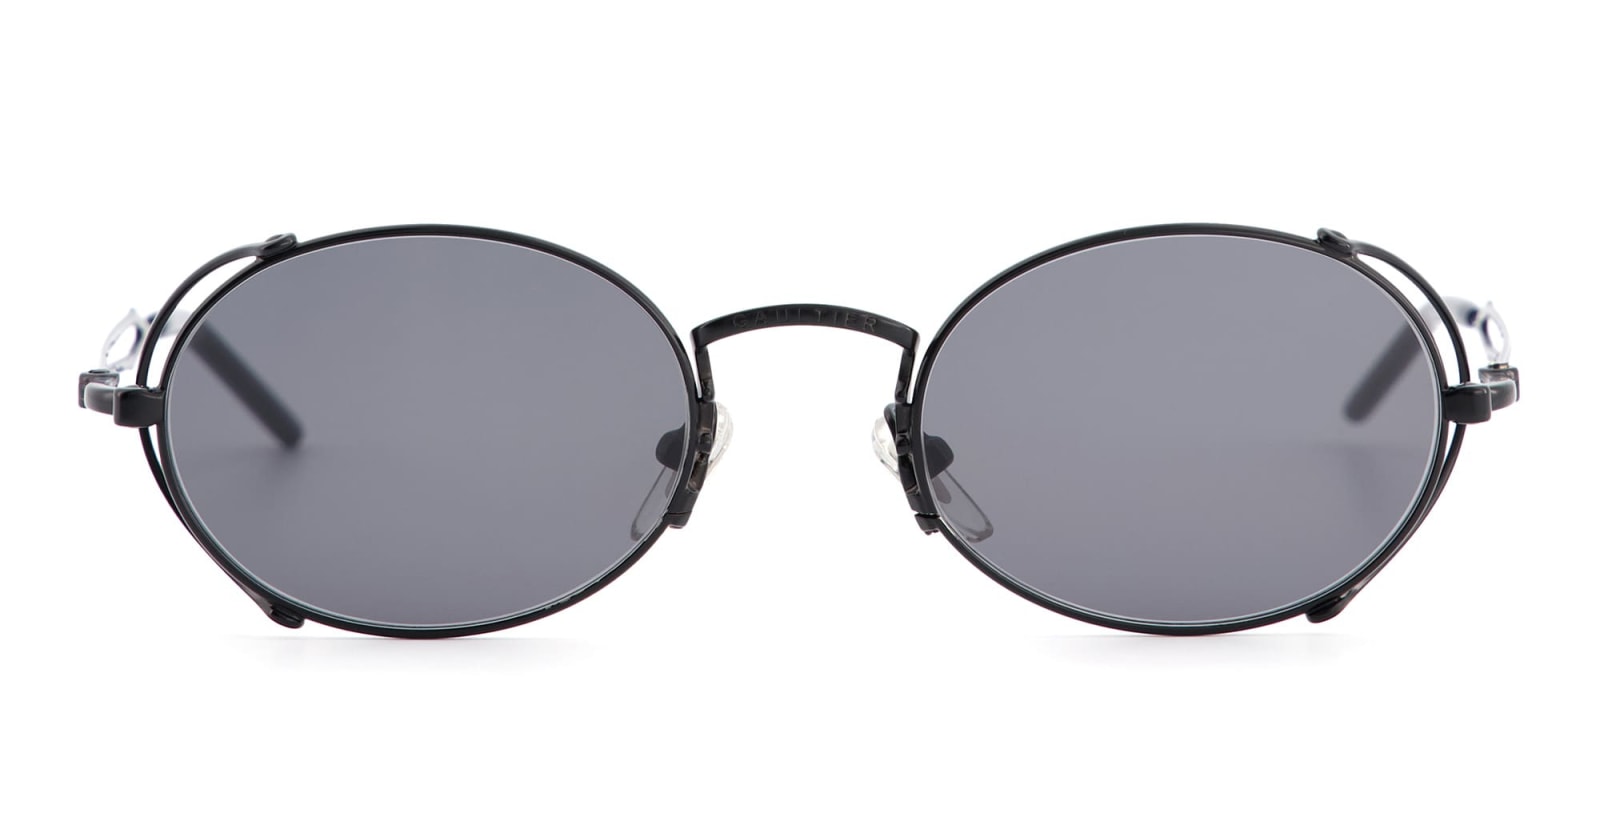 Jean Paul Gaultier 55-3175 - Arceau / Black Sunglasses In Gray